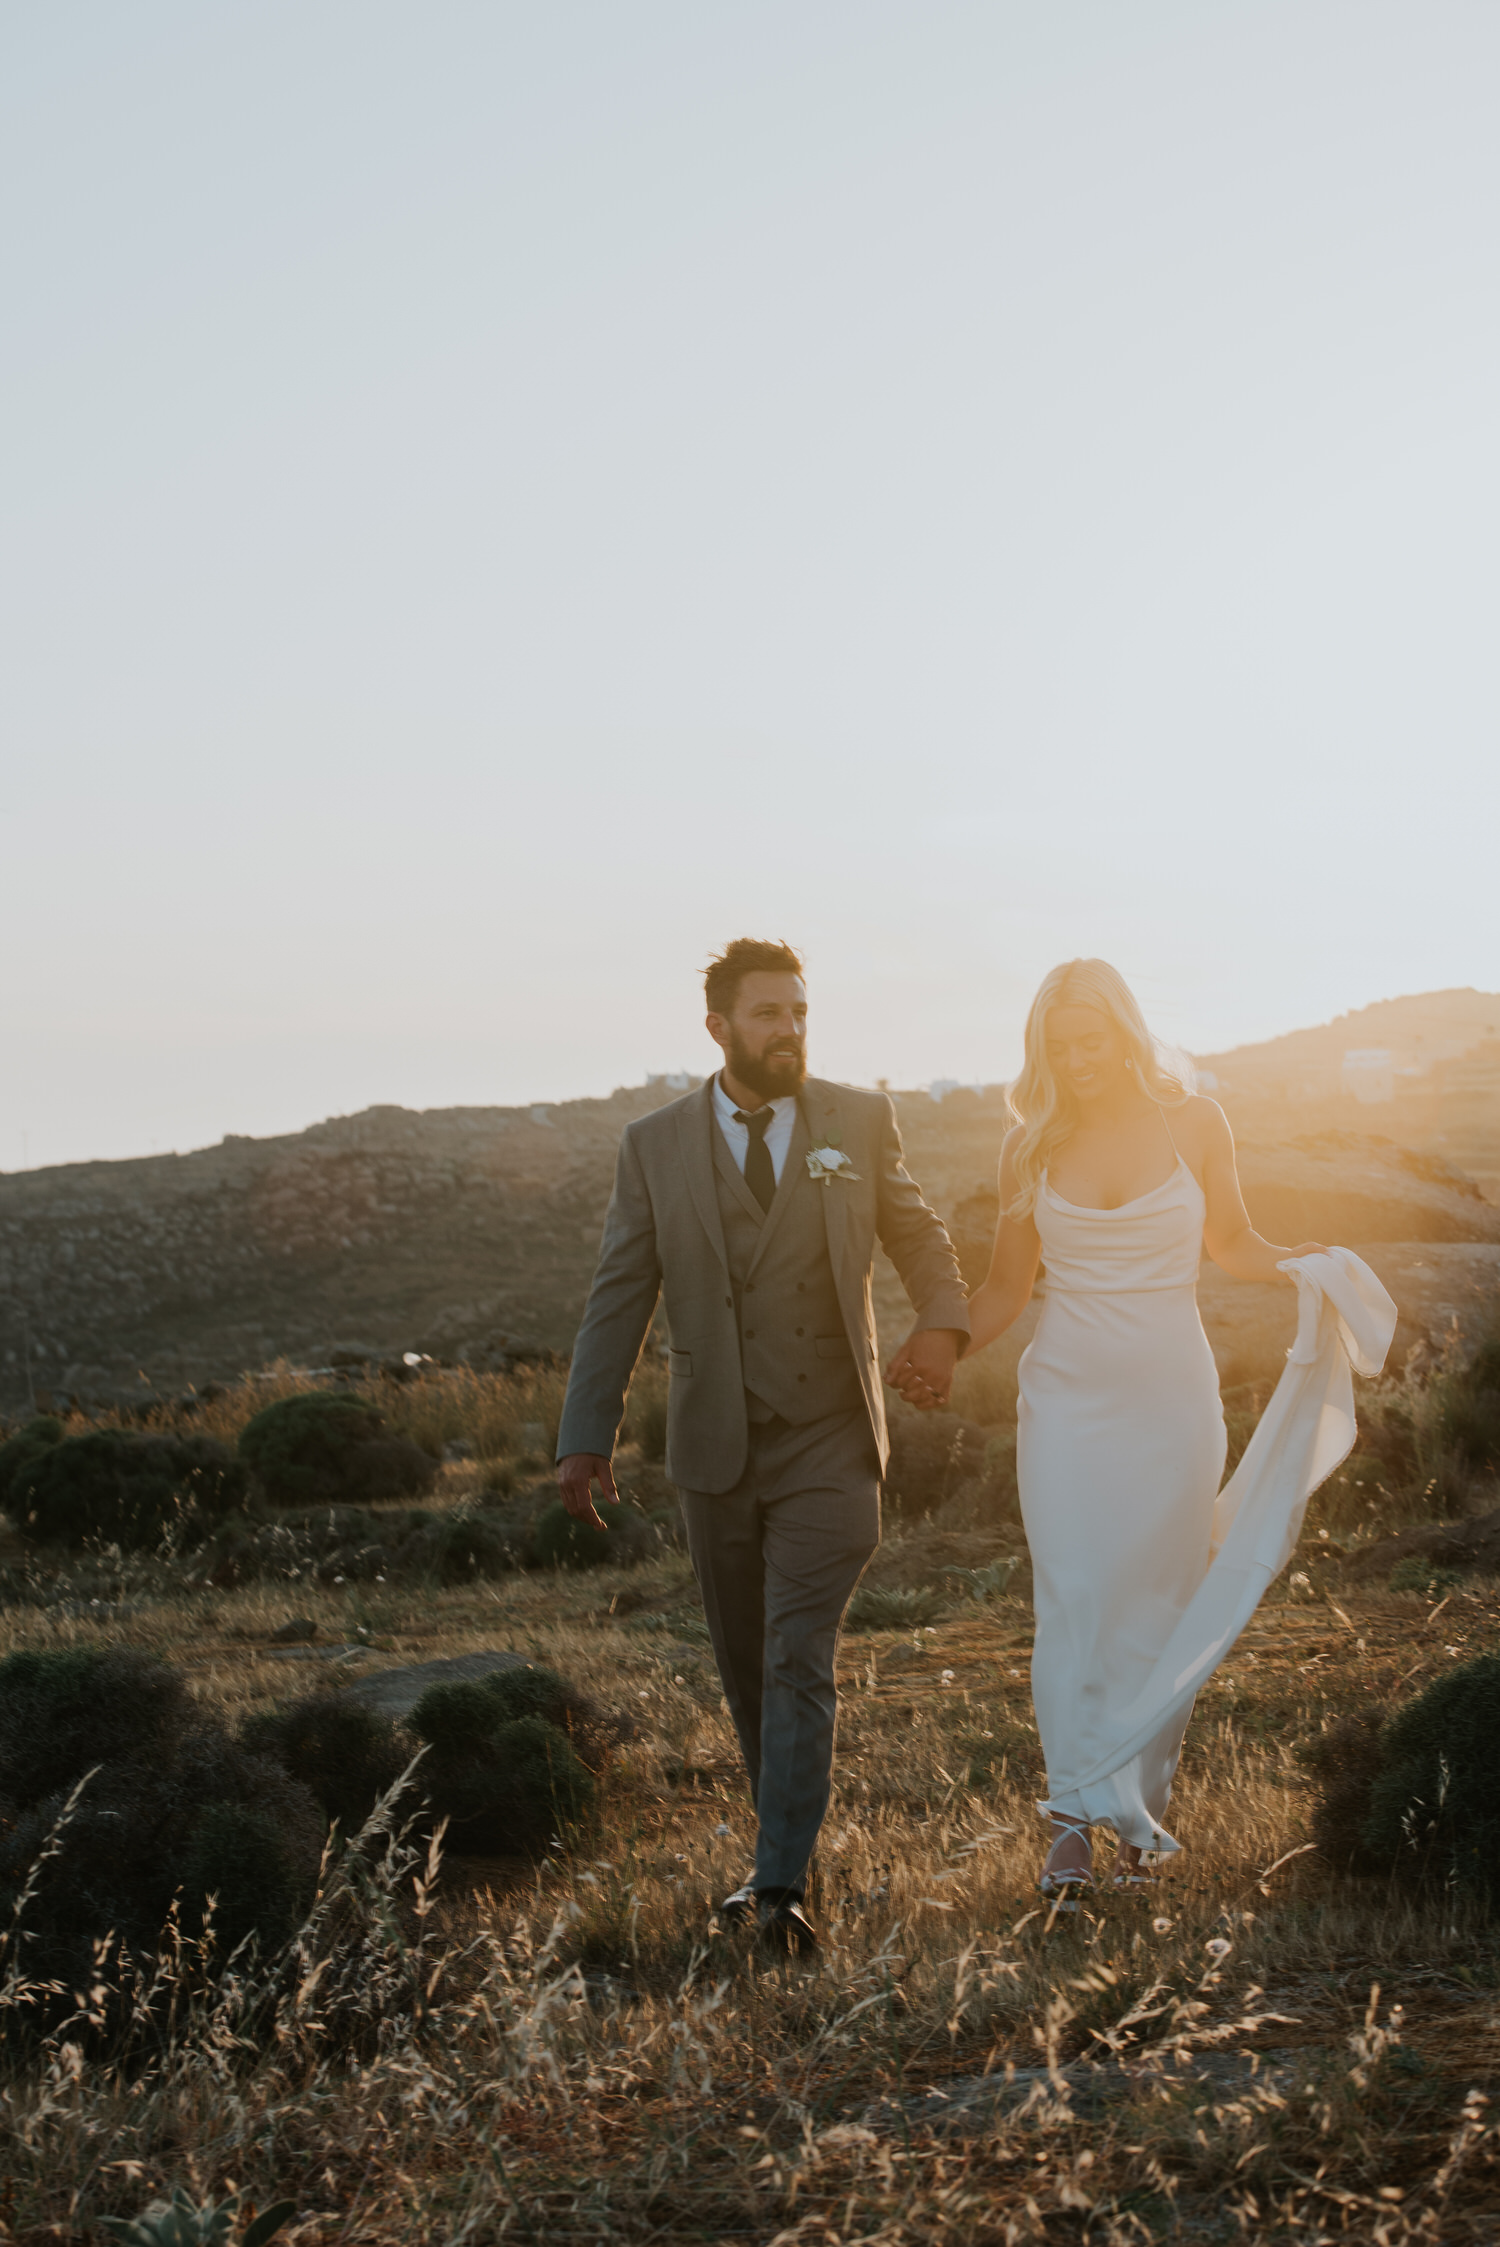 Mykonos wedding photographer: bride and groom basked in beautiful golden light walking through grassy field.